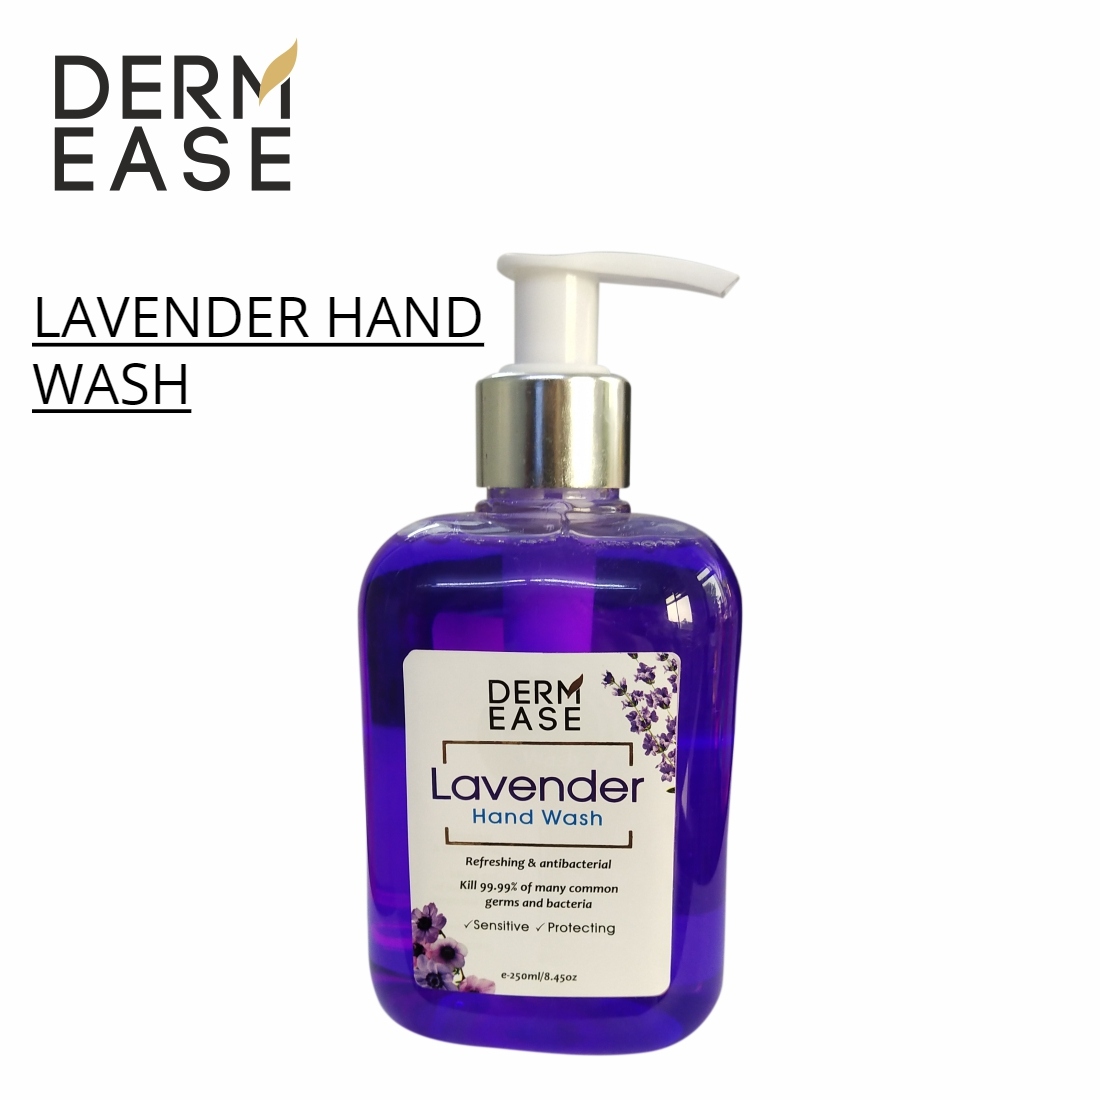 DERM EASE Lavender Hand Wash